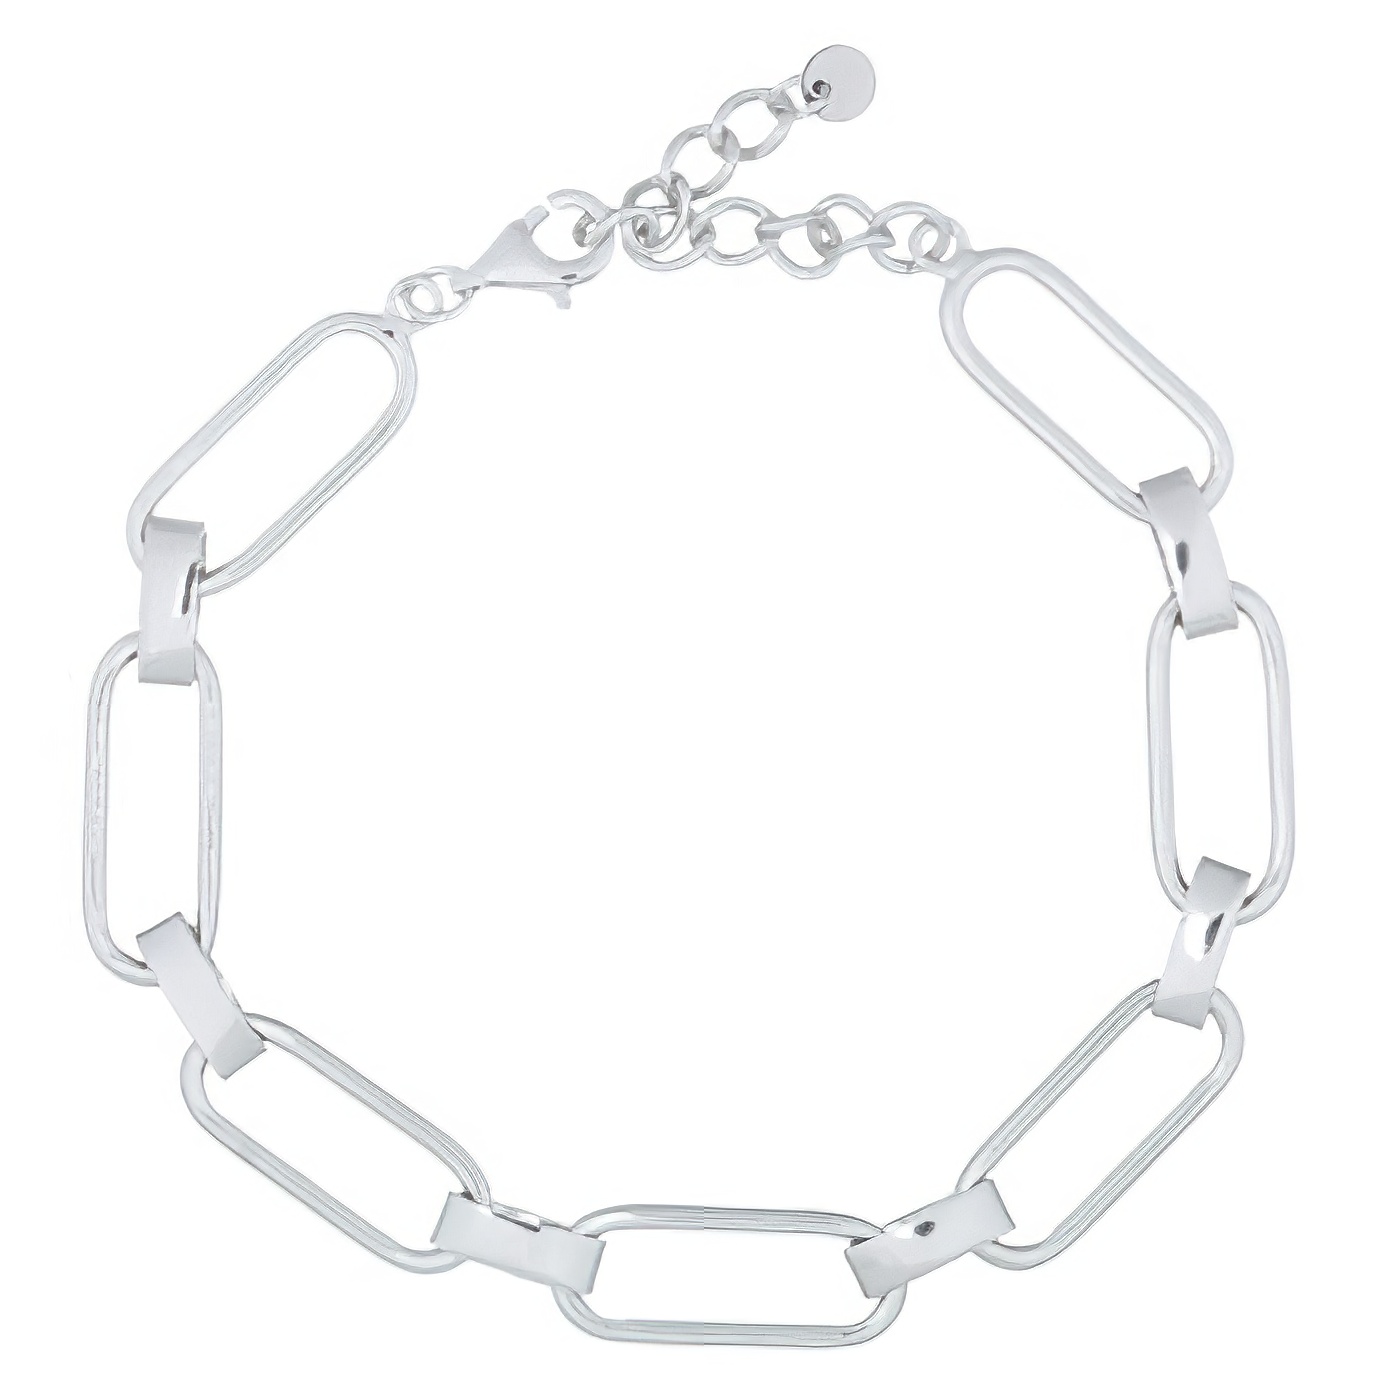 Sterling Silver Capsule Wire Work Chain Bracelets 